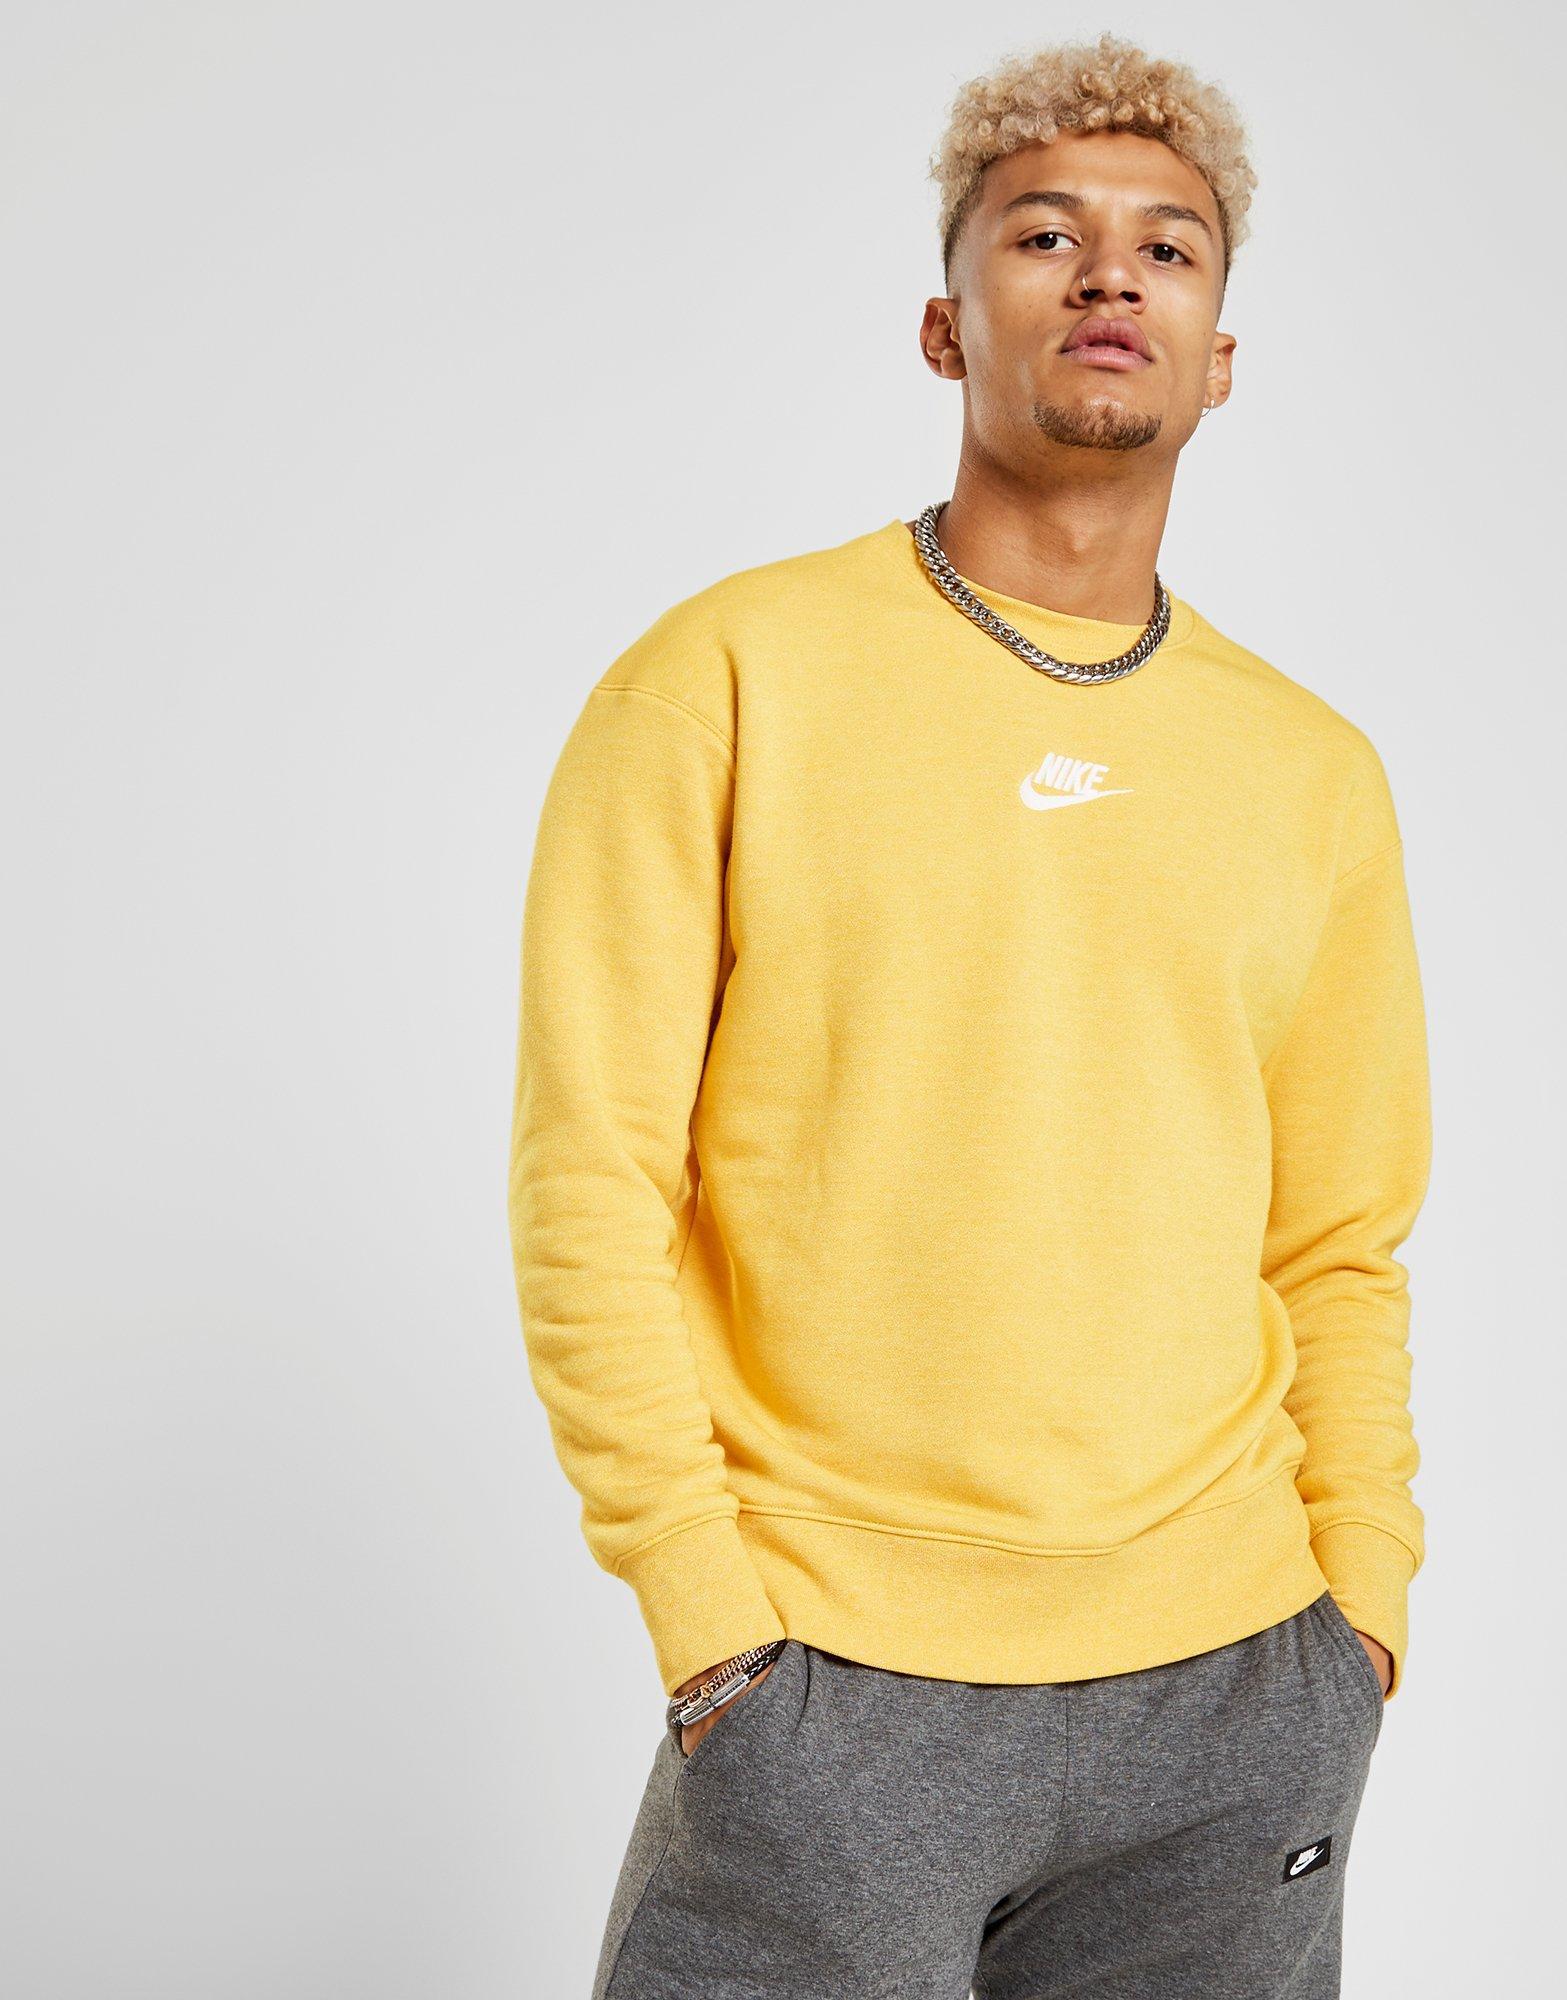 Nike Cotton Heritage Crew Sweatshirt in Yellow for Men - Lyst